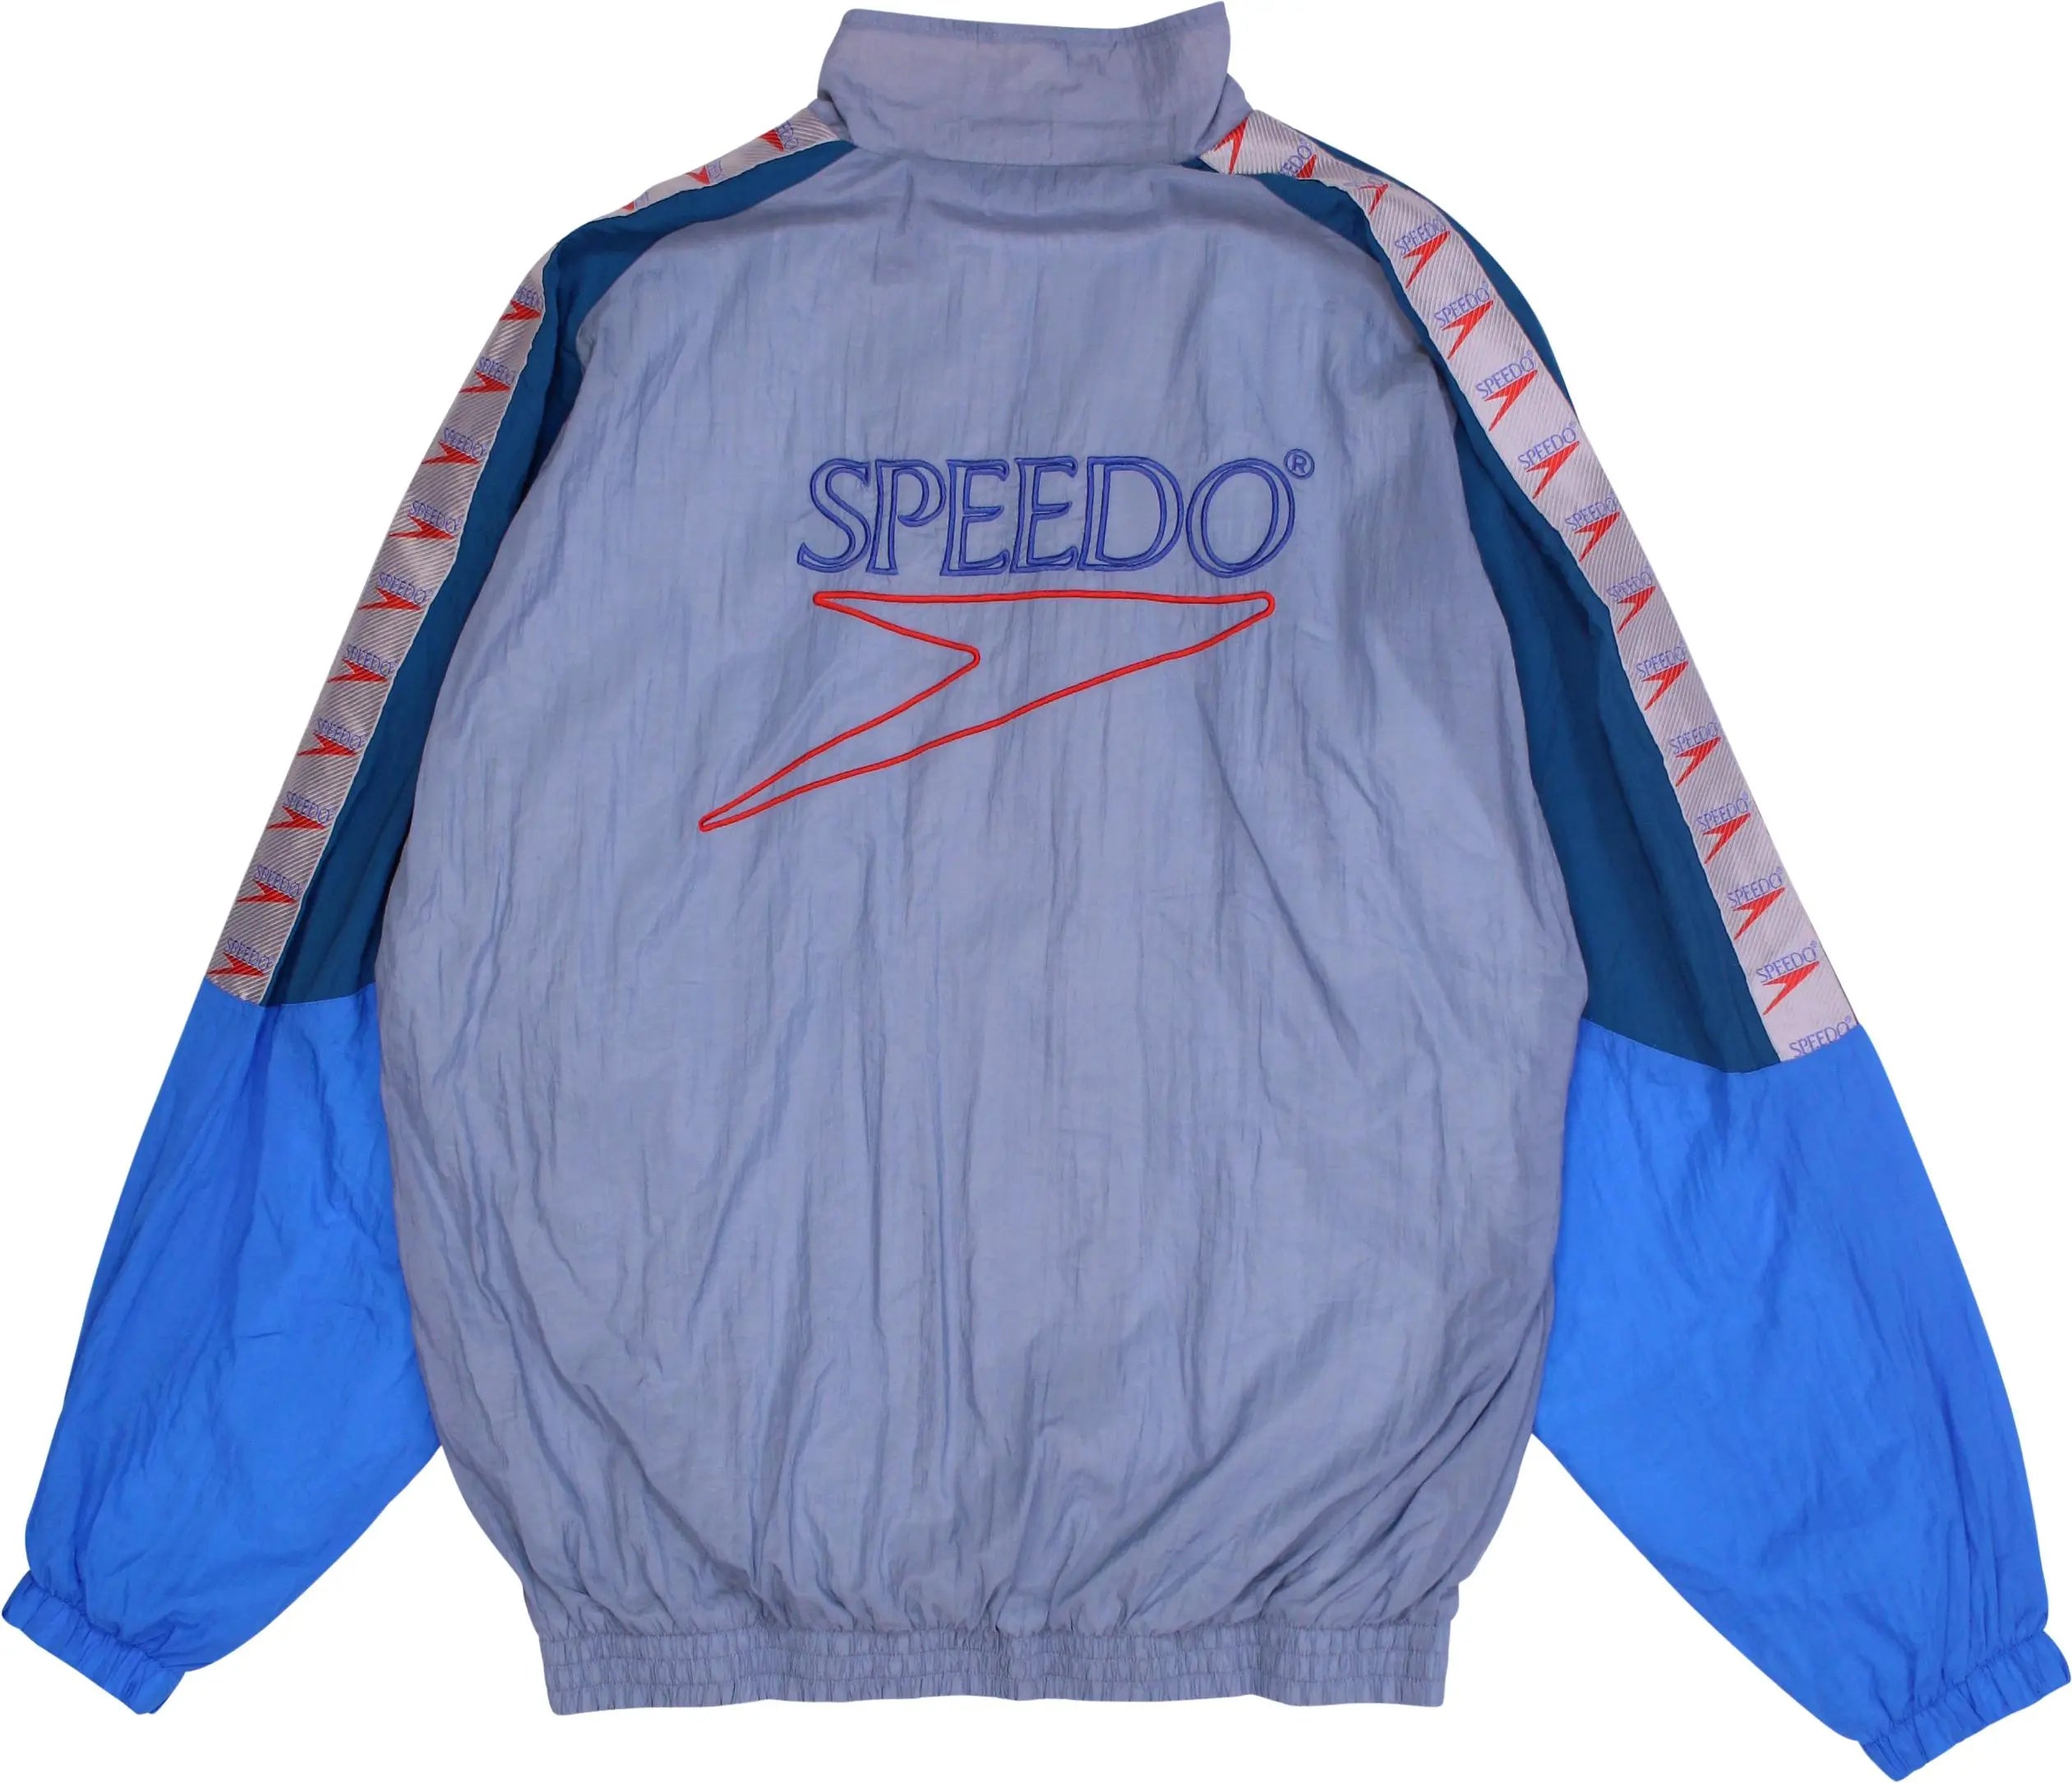 Speedo - 80s/90s Windbreaker by Speedo- ThriftTale.com - Vintage and second handclothing